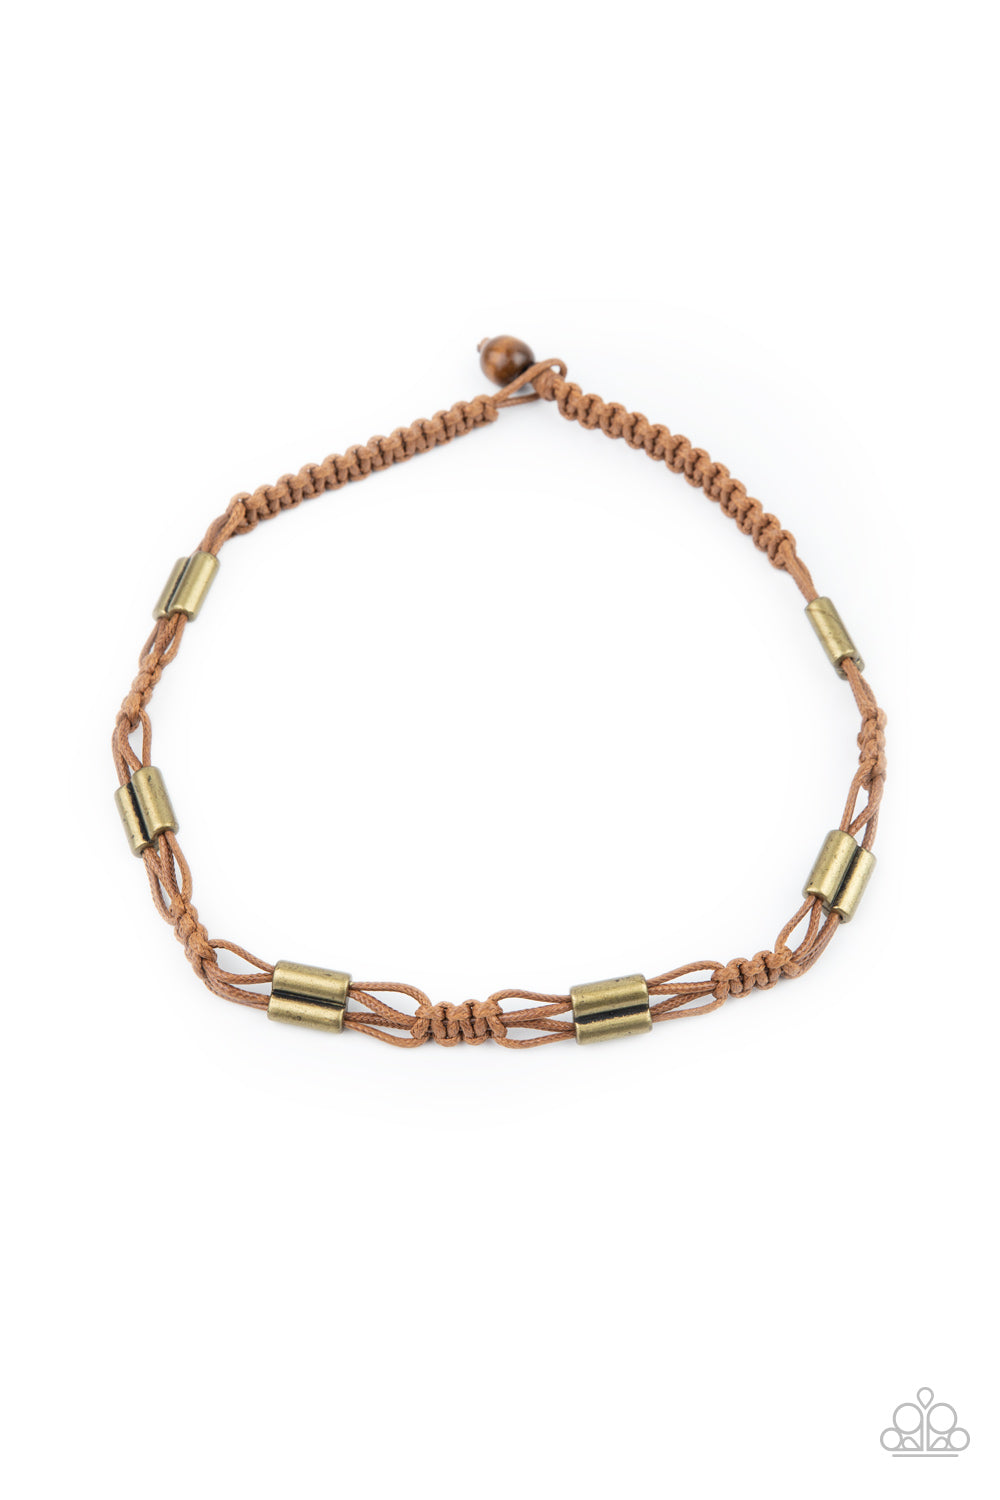 Offshore Drifter - Brown Men's Necklace & Always Adrift - Brown Urban Bracelet Combo - Princess Glam Shop